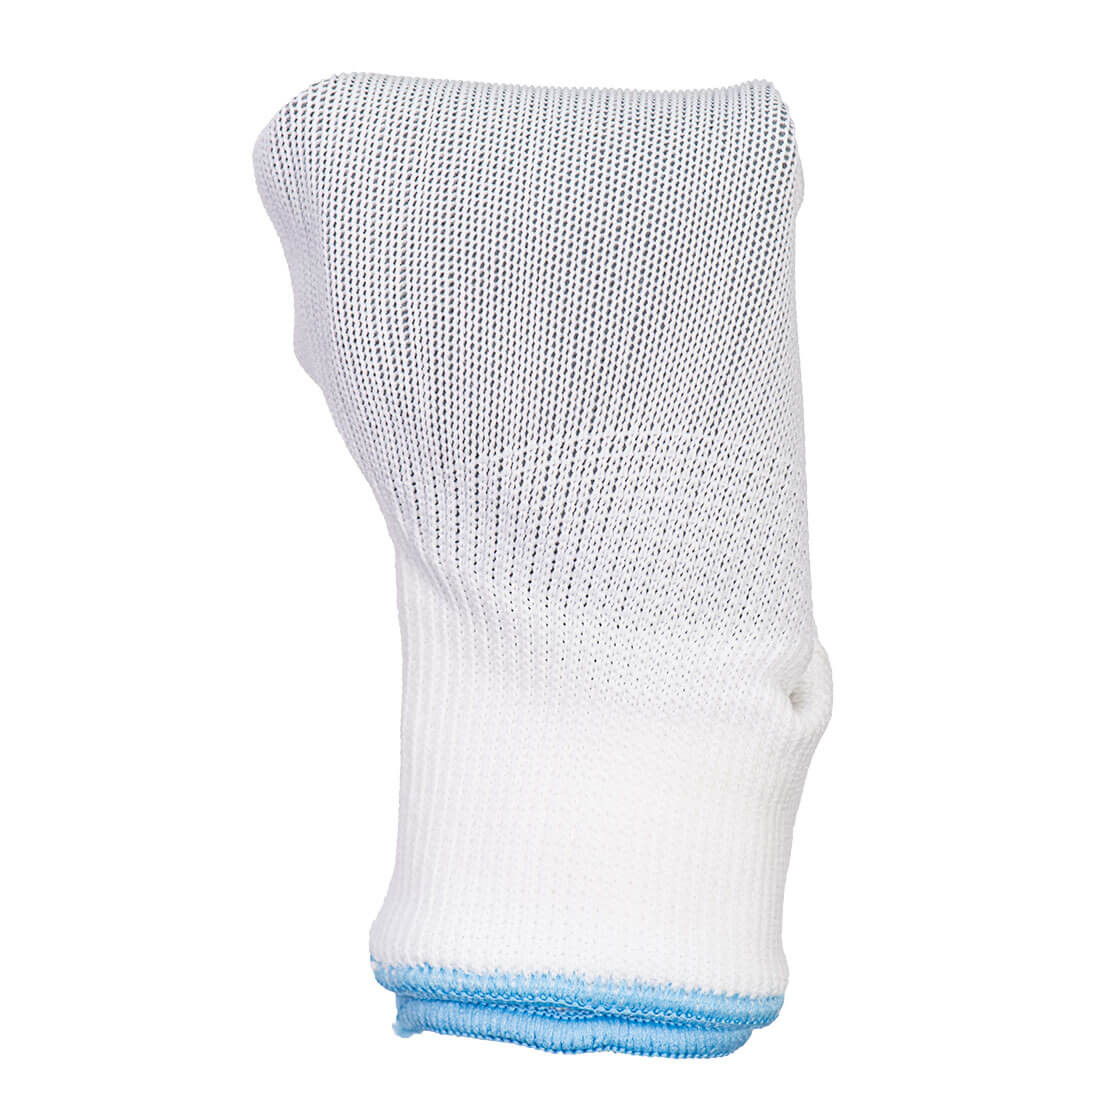 Vending Flexo Grip Glove - Personal protection